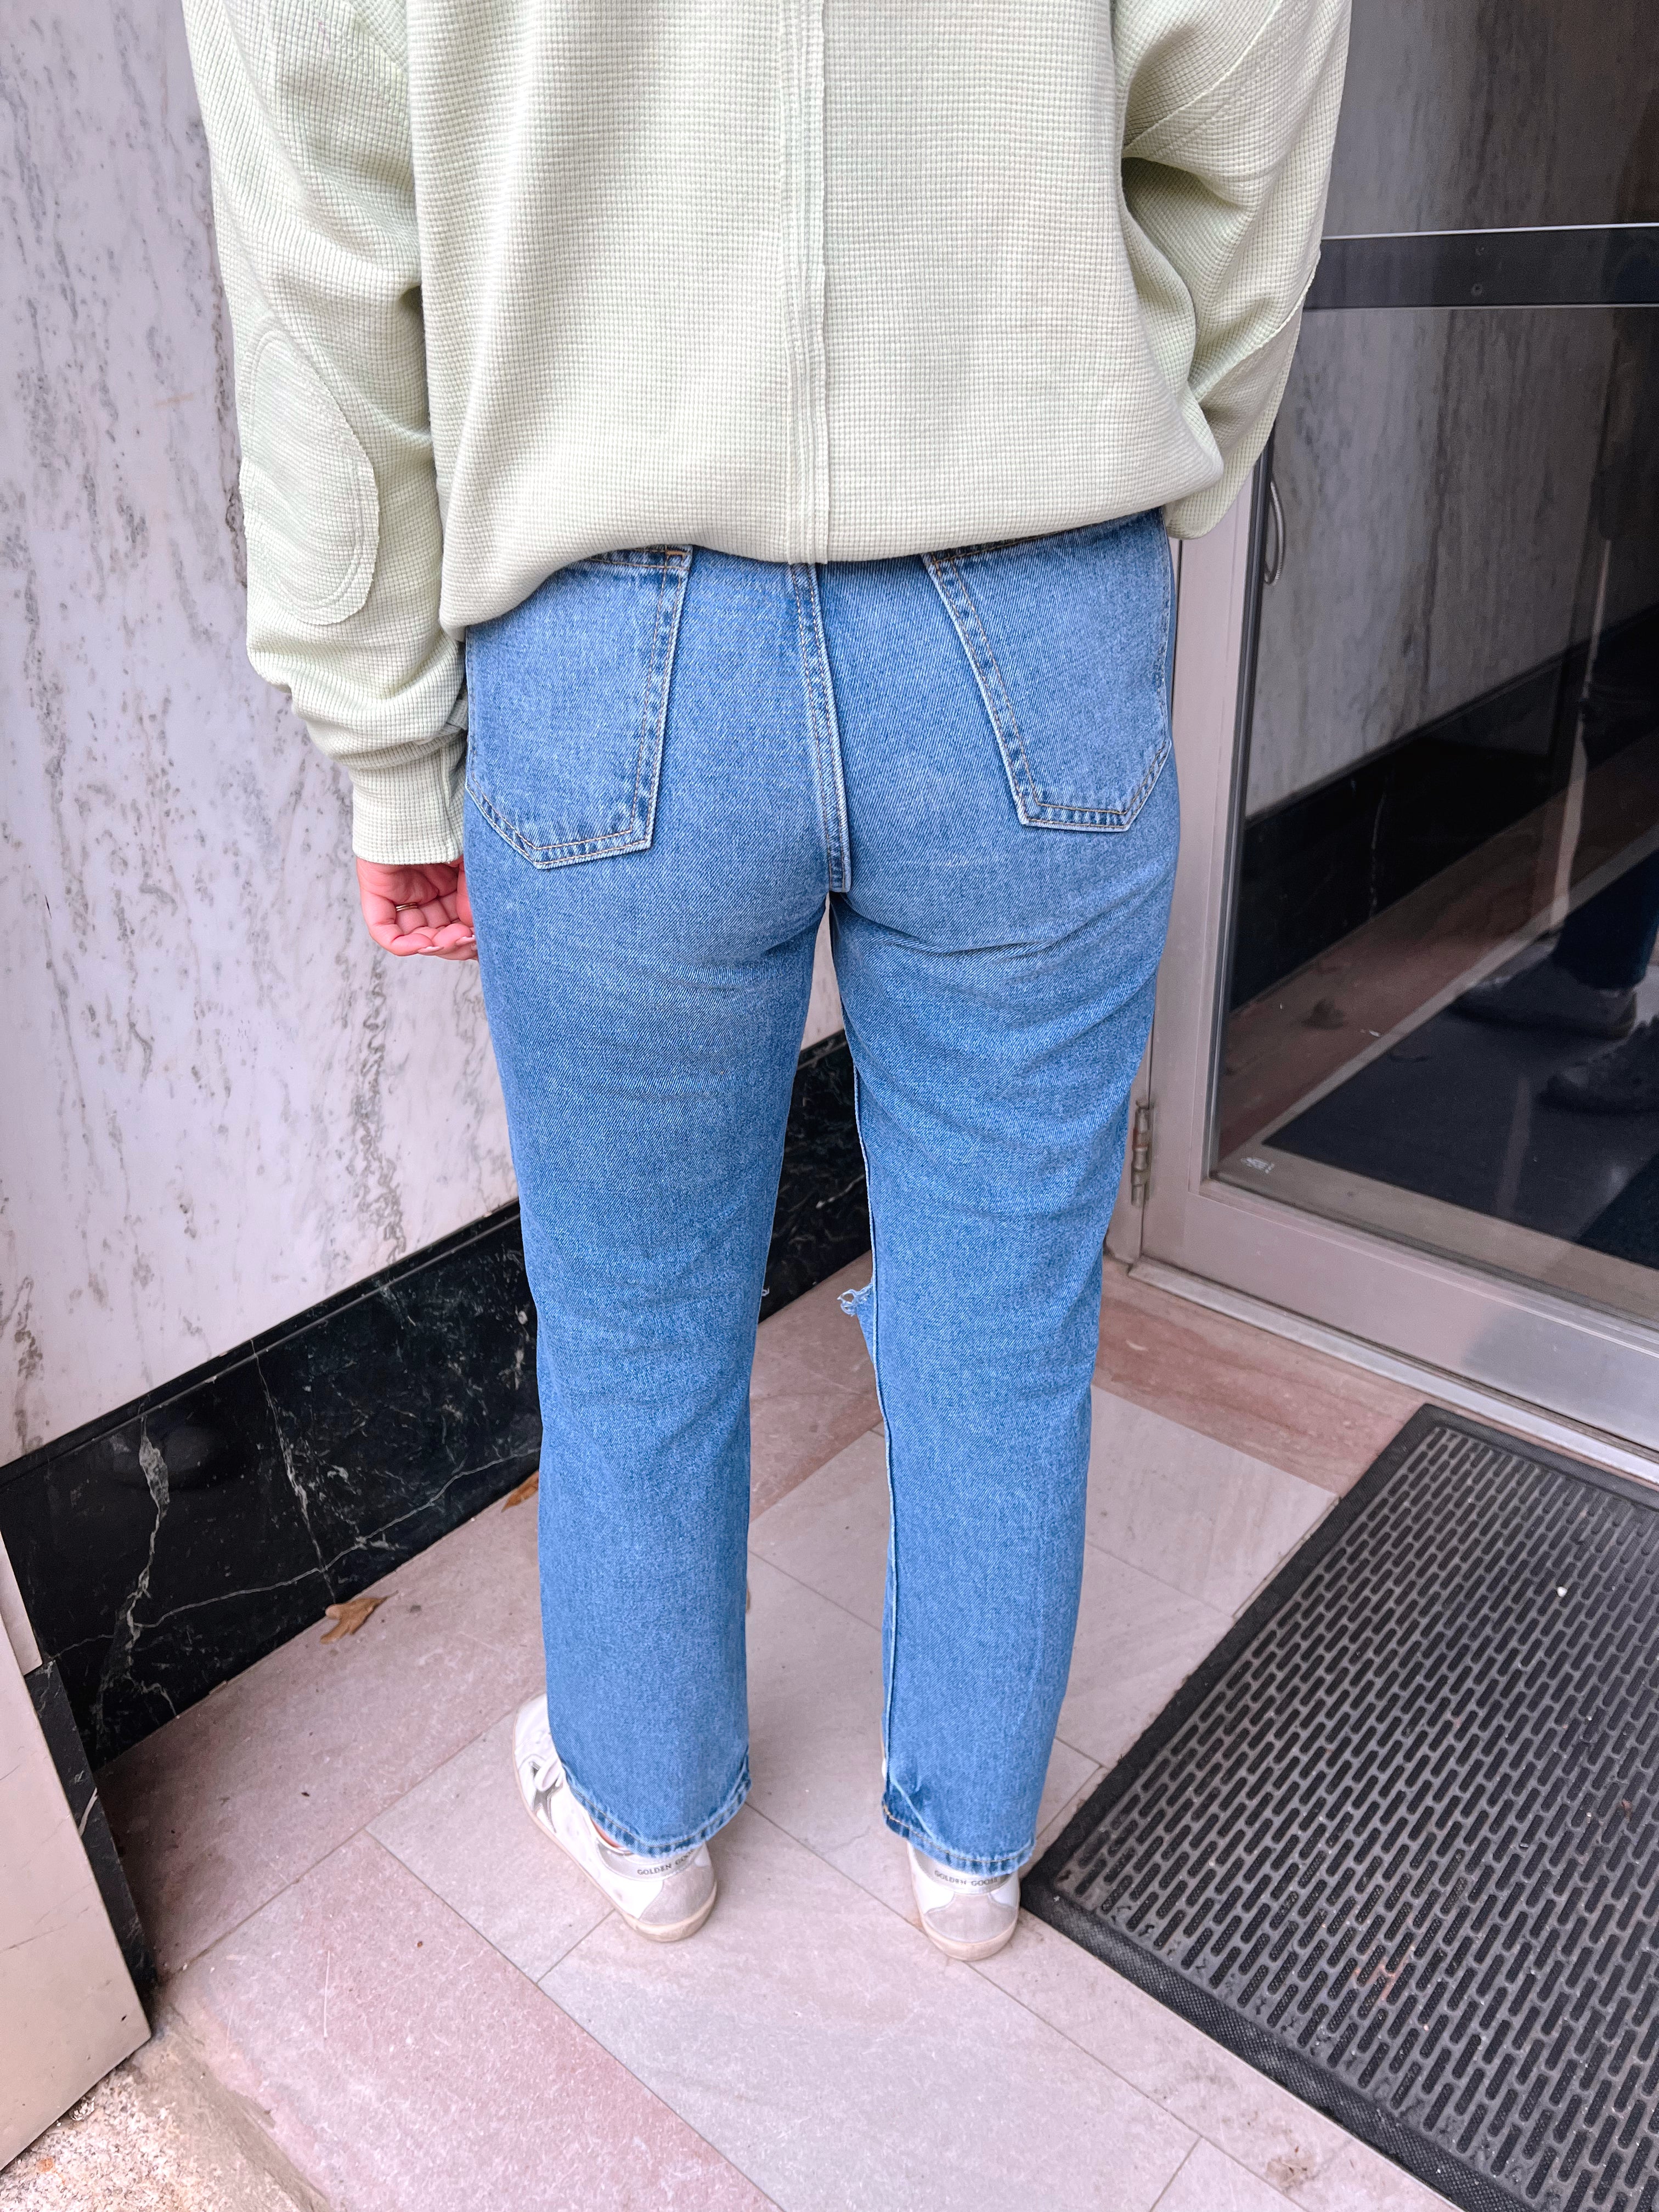 The Staple Jeans